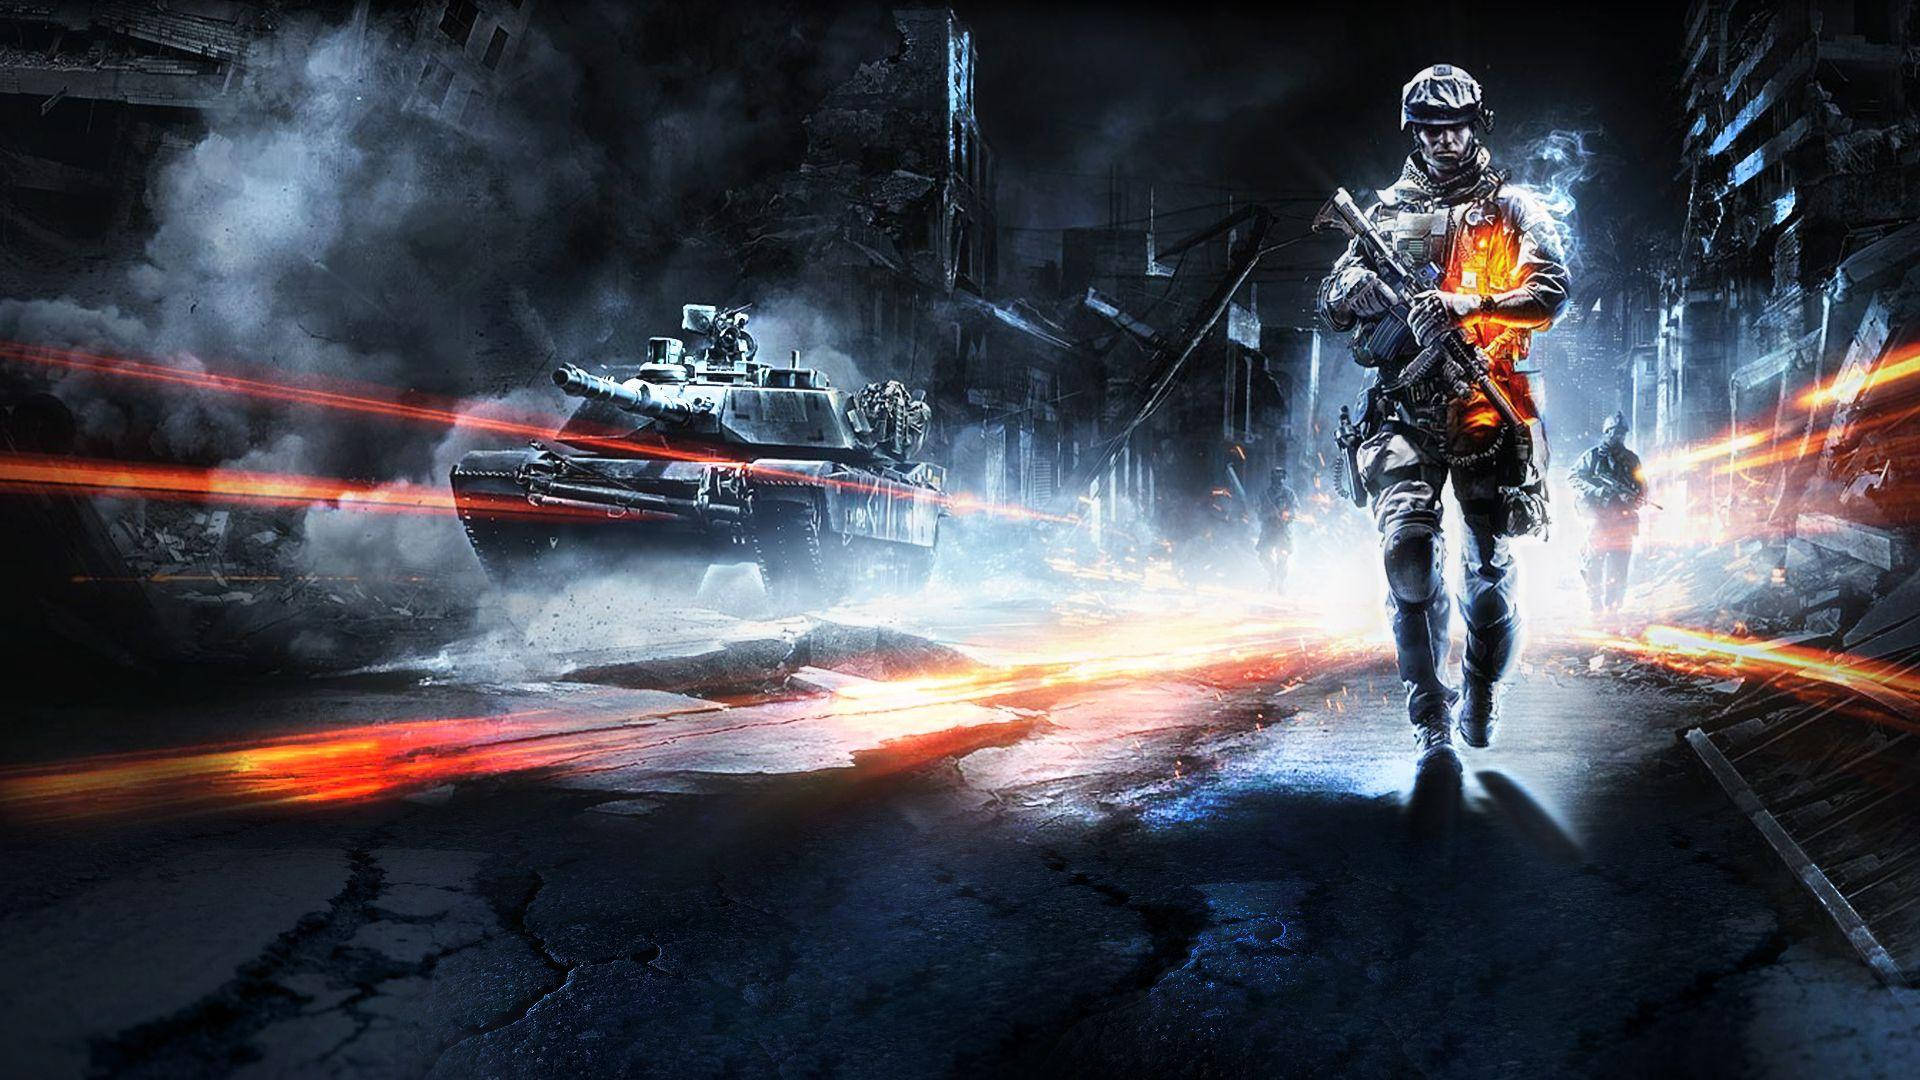 Battlefield 1 Hd Image Of Nighttime Warzone